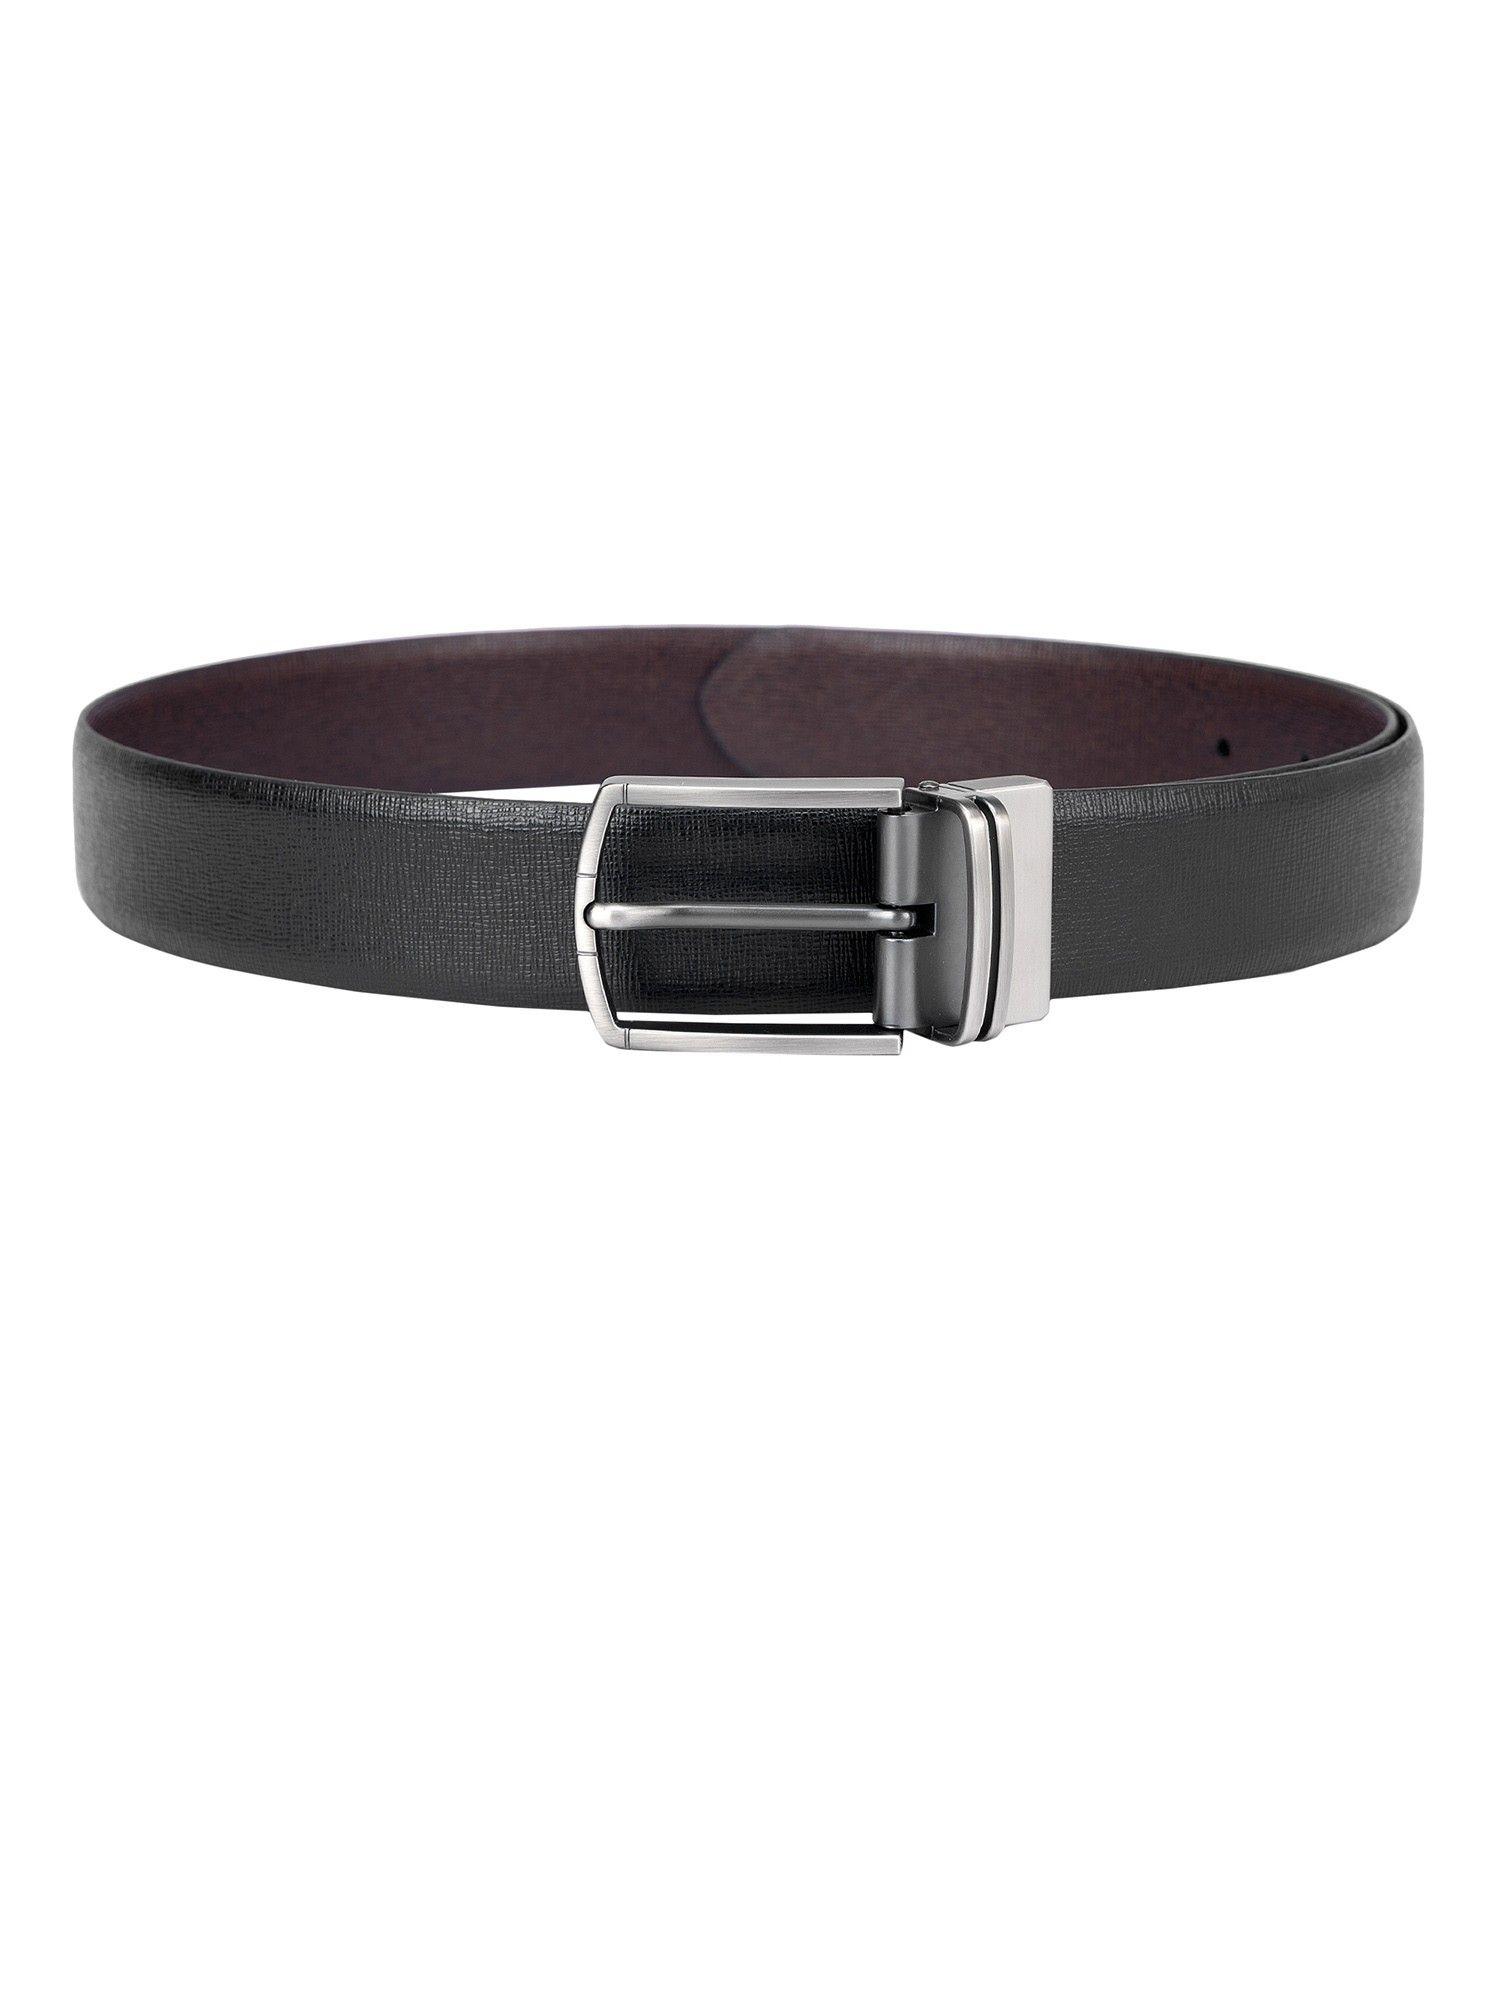 saffiano leather black & brown reversible belt bm-3304-35r-olsaffiano